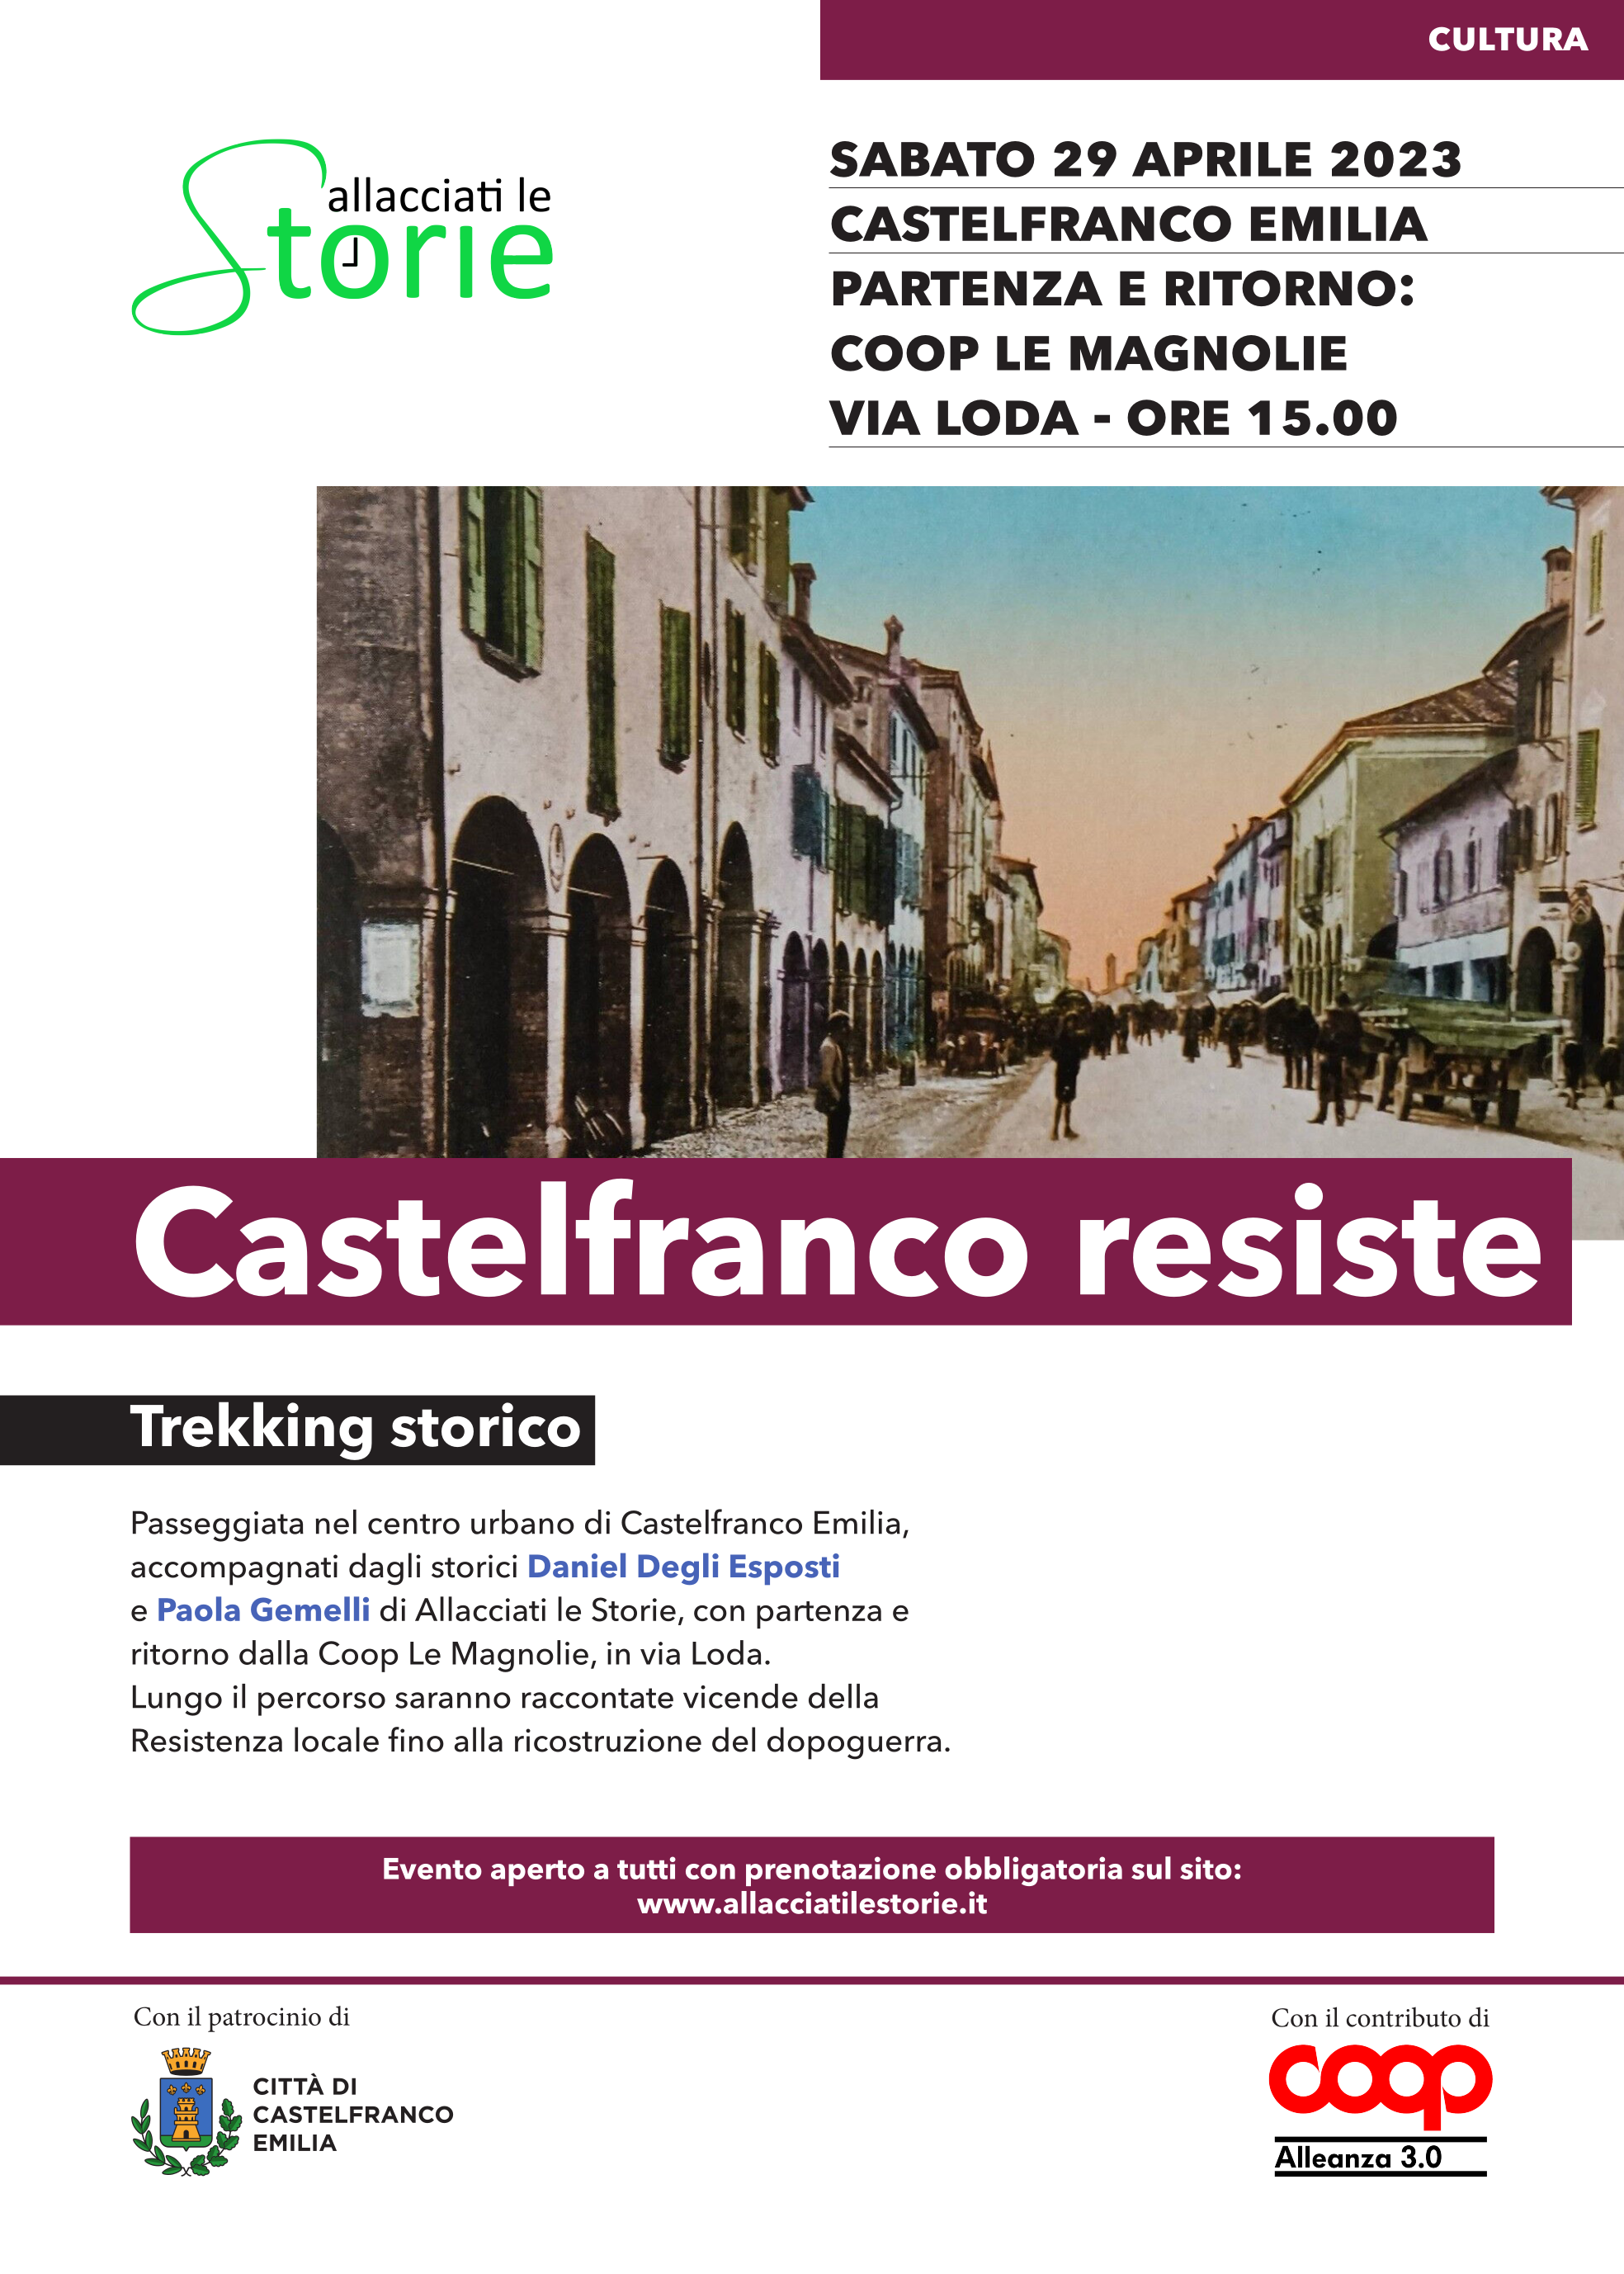 Castelfranco resiste: trekking storico